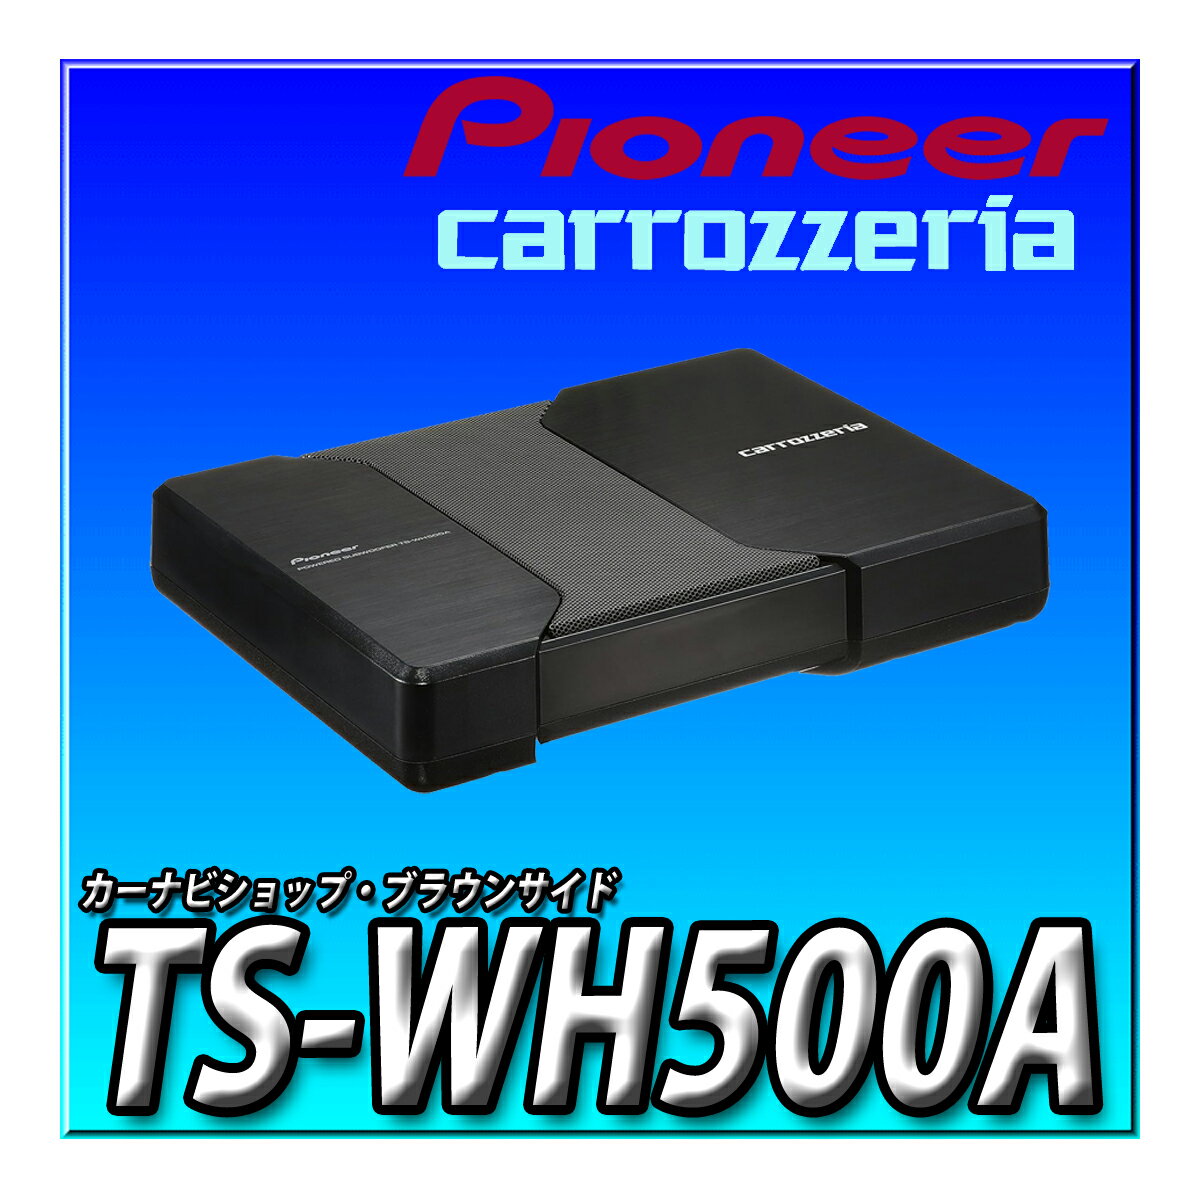 TS-WH500A Pioneer パイオニア スピーカー サブウーファー パワードサブウーファー カロッツェリア